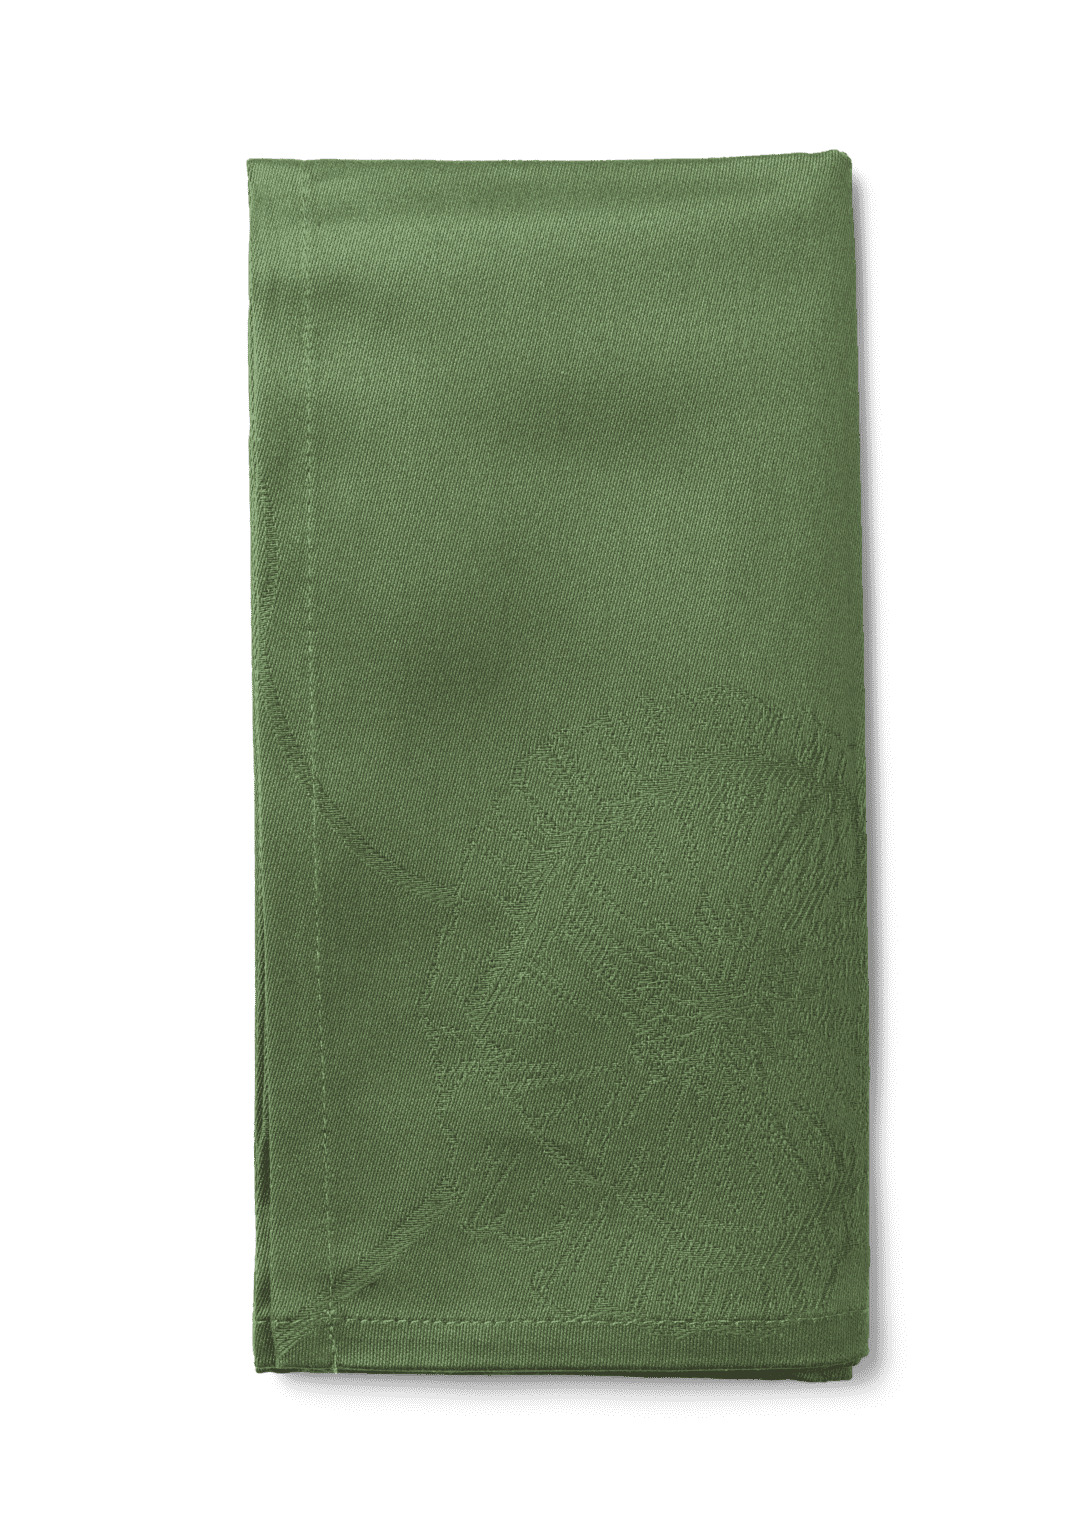 Hammershøi Poppy Stofserviet, 45x45 cm grøn, 4 stk